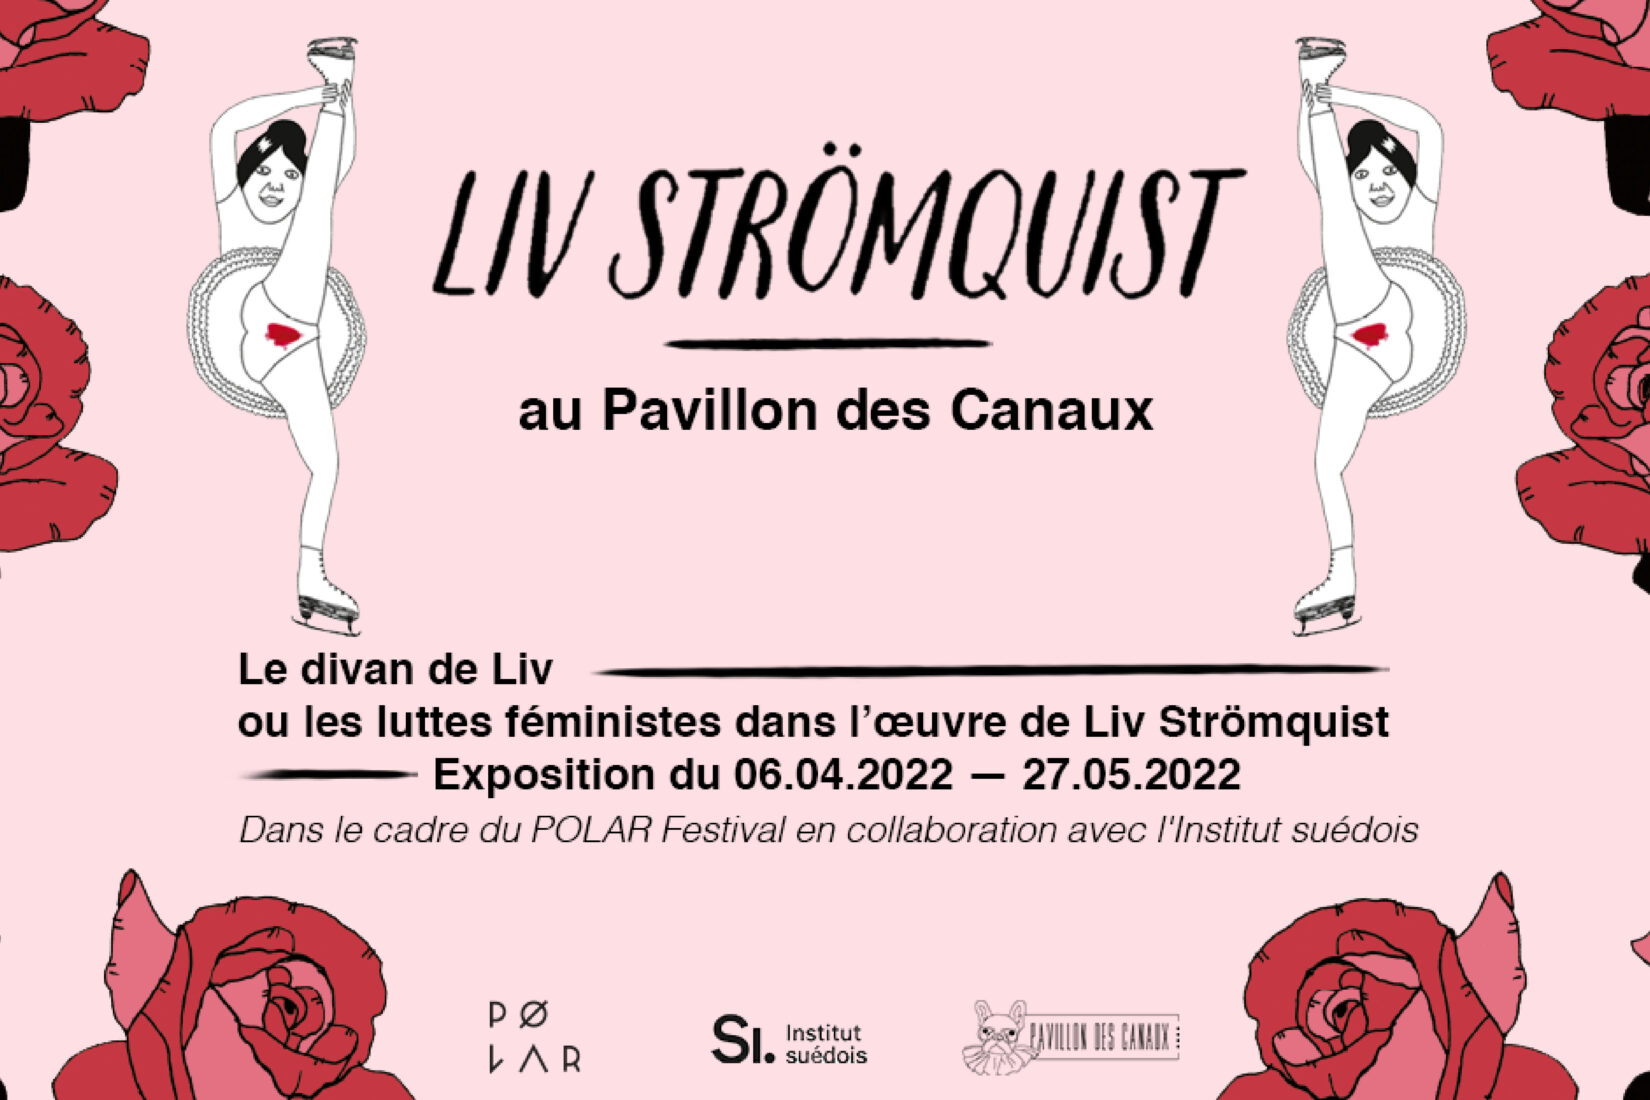 Poster of the Liv Strömquist exhibition at the Pavillon des Canaux